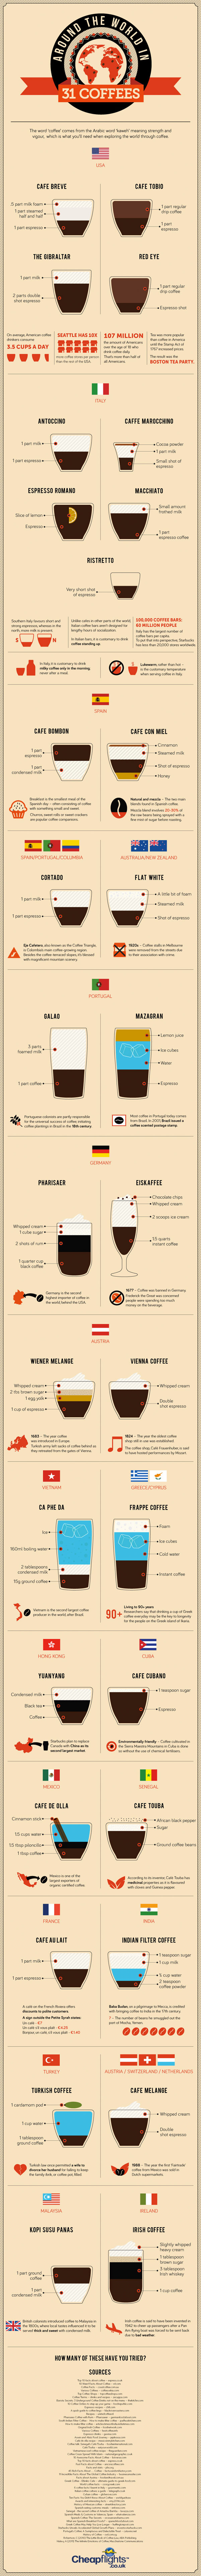 31 ways to enjoy coffee from around the world